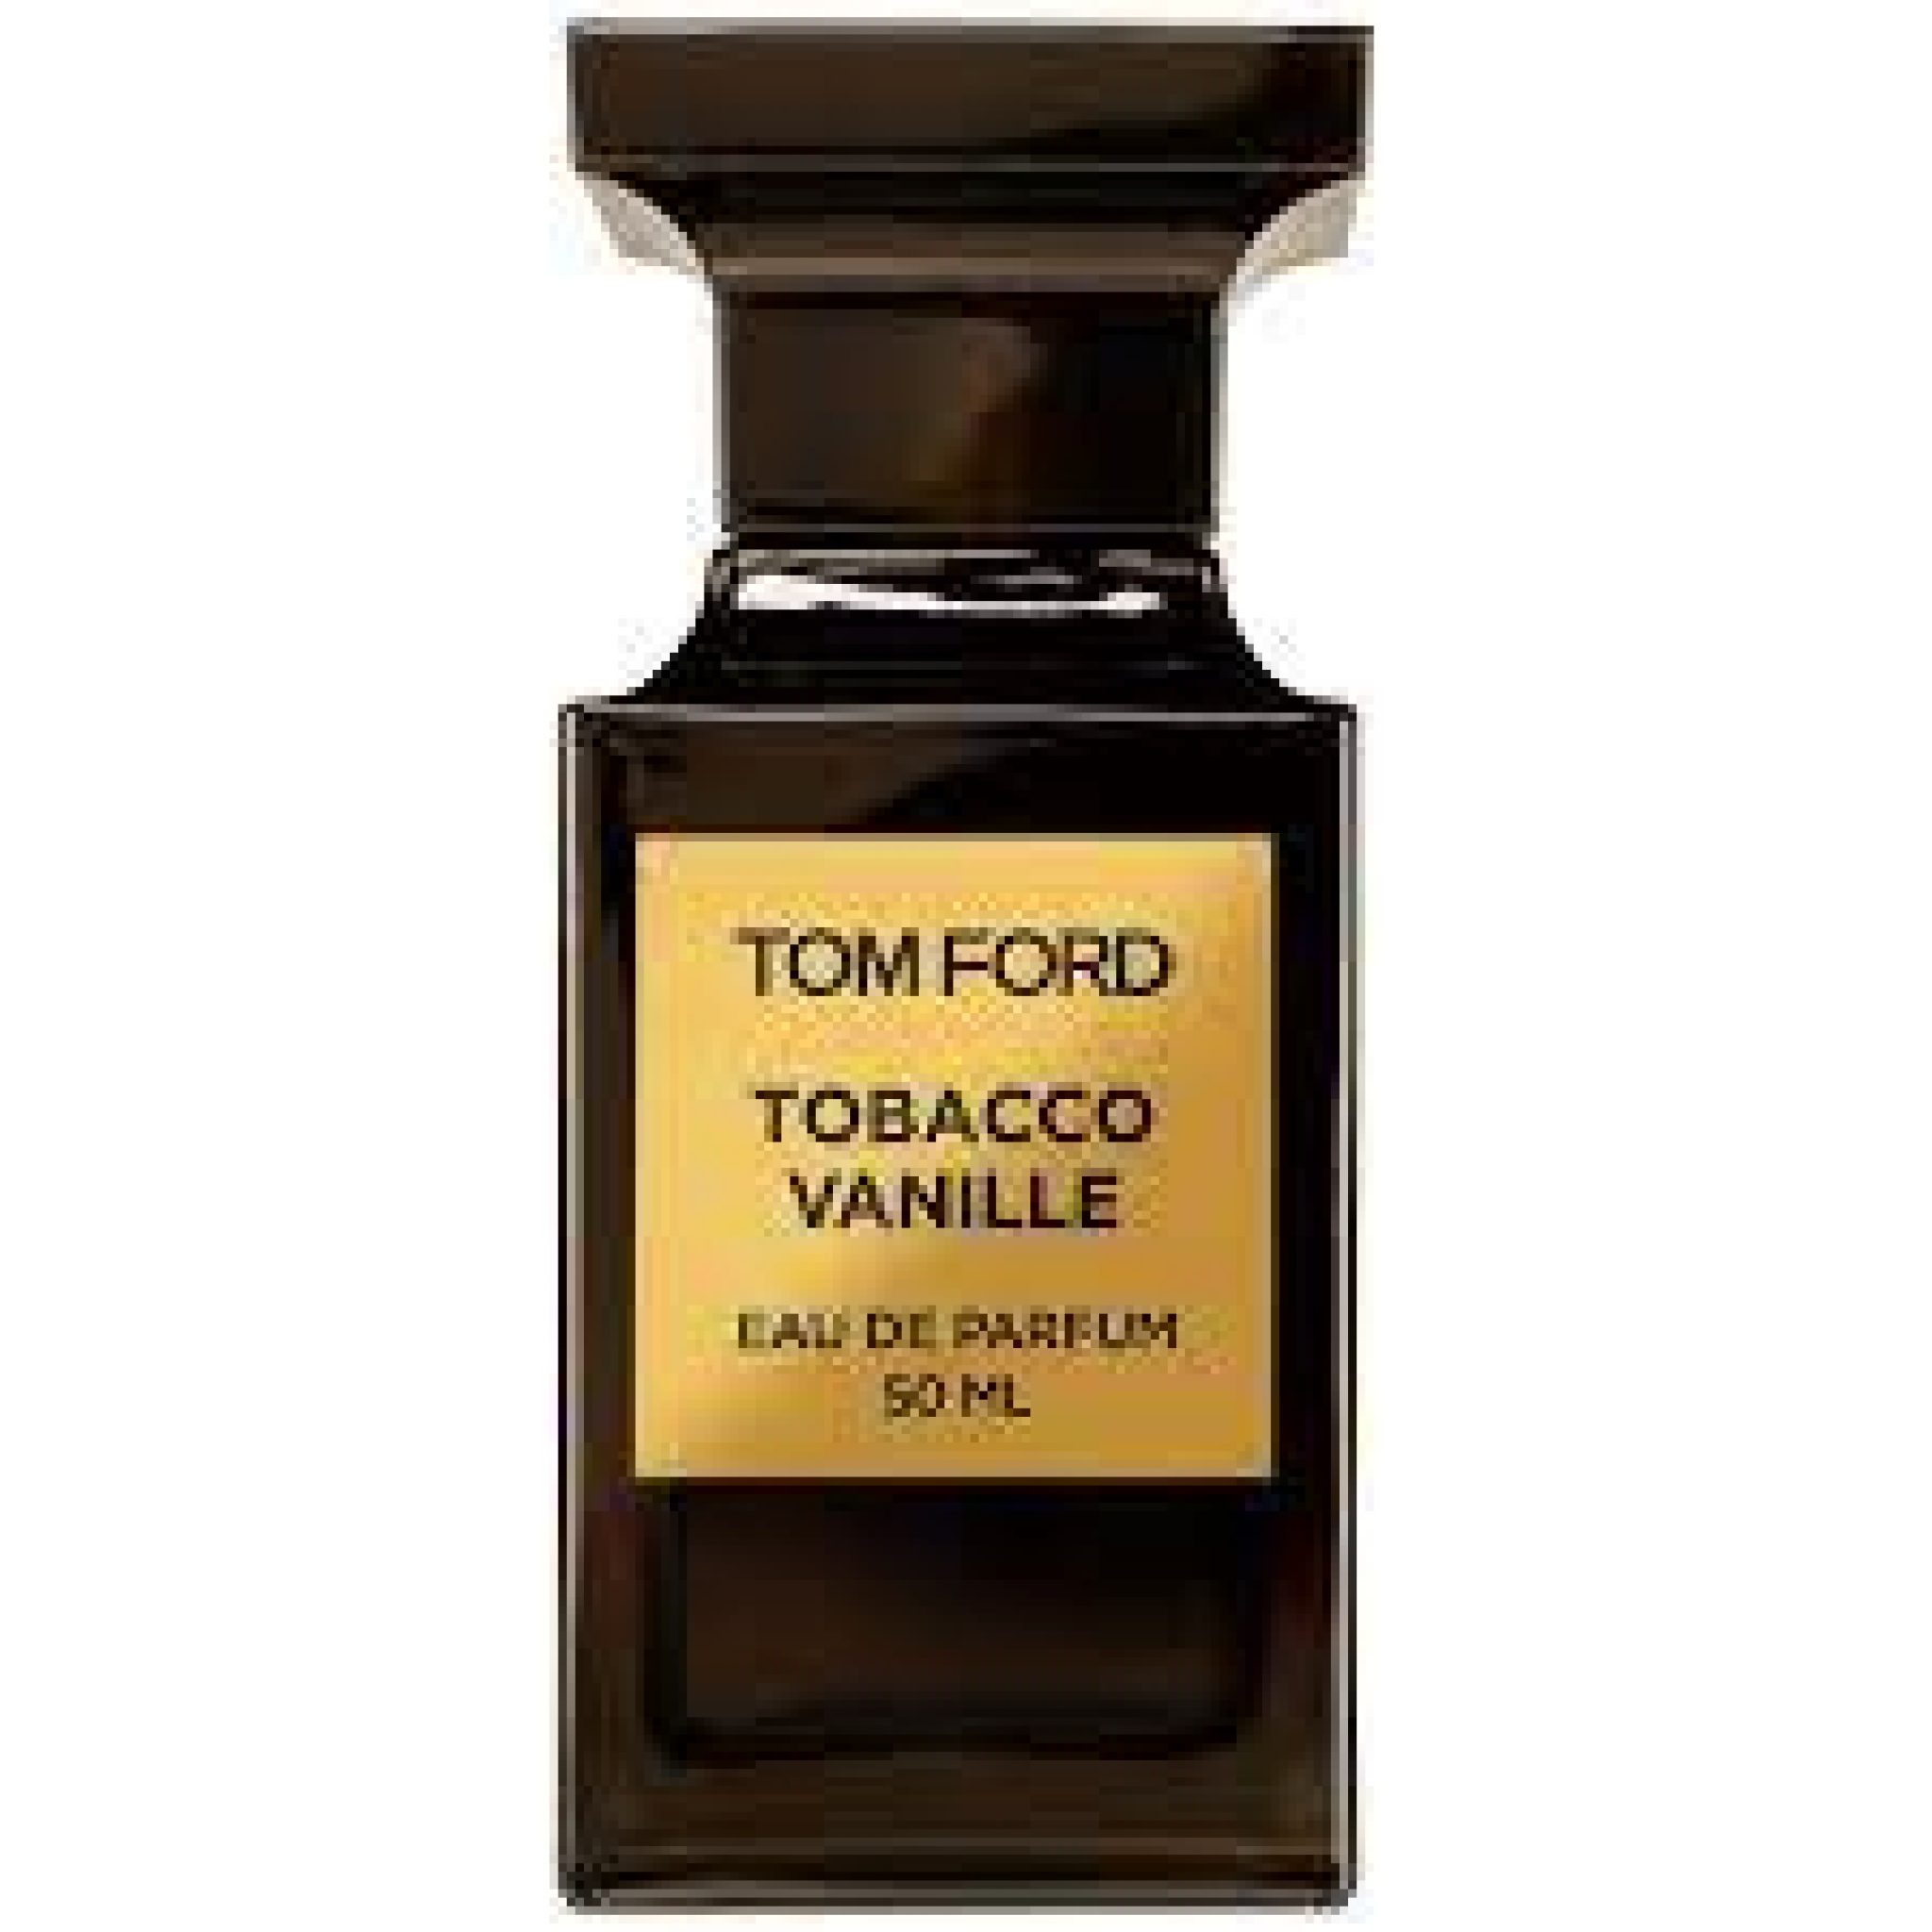 Tobacco Vanille - Tom Ford bewertung